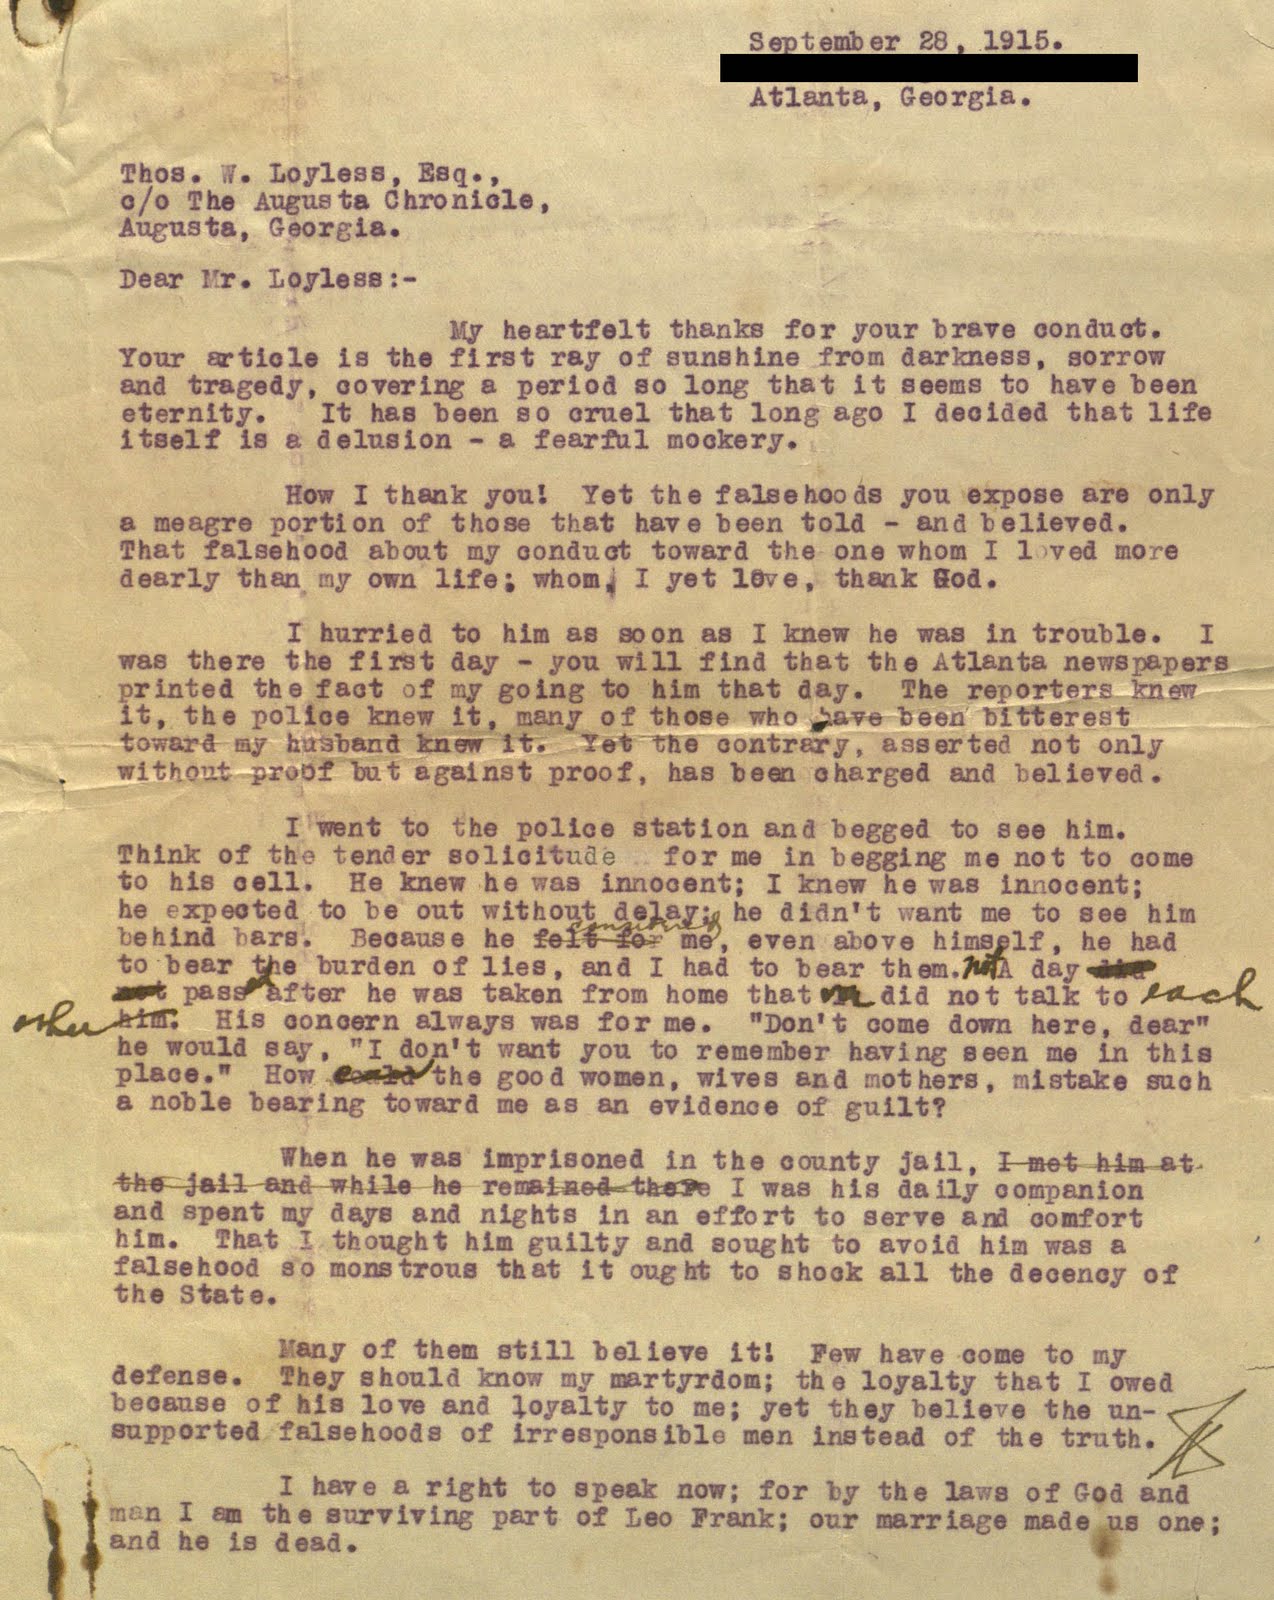 A worn-down telegram to Mr. Loyles from September 28, 1915